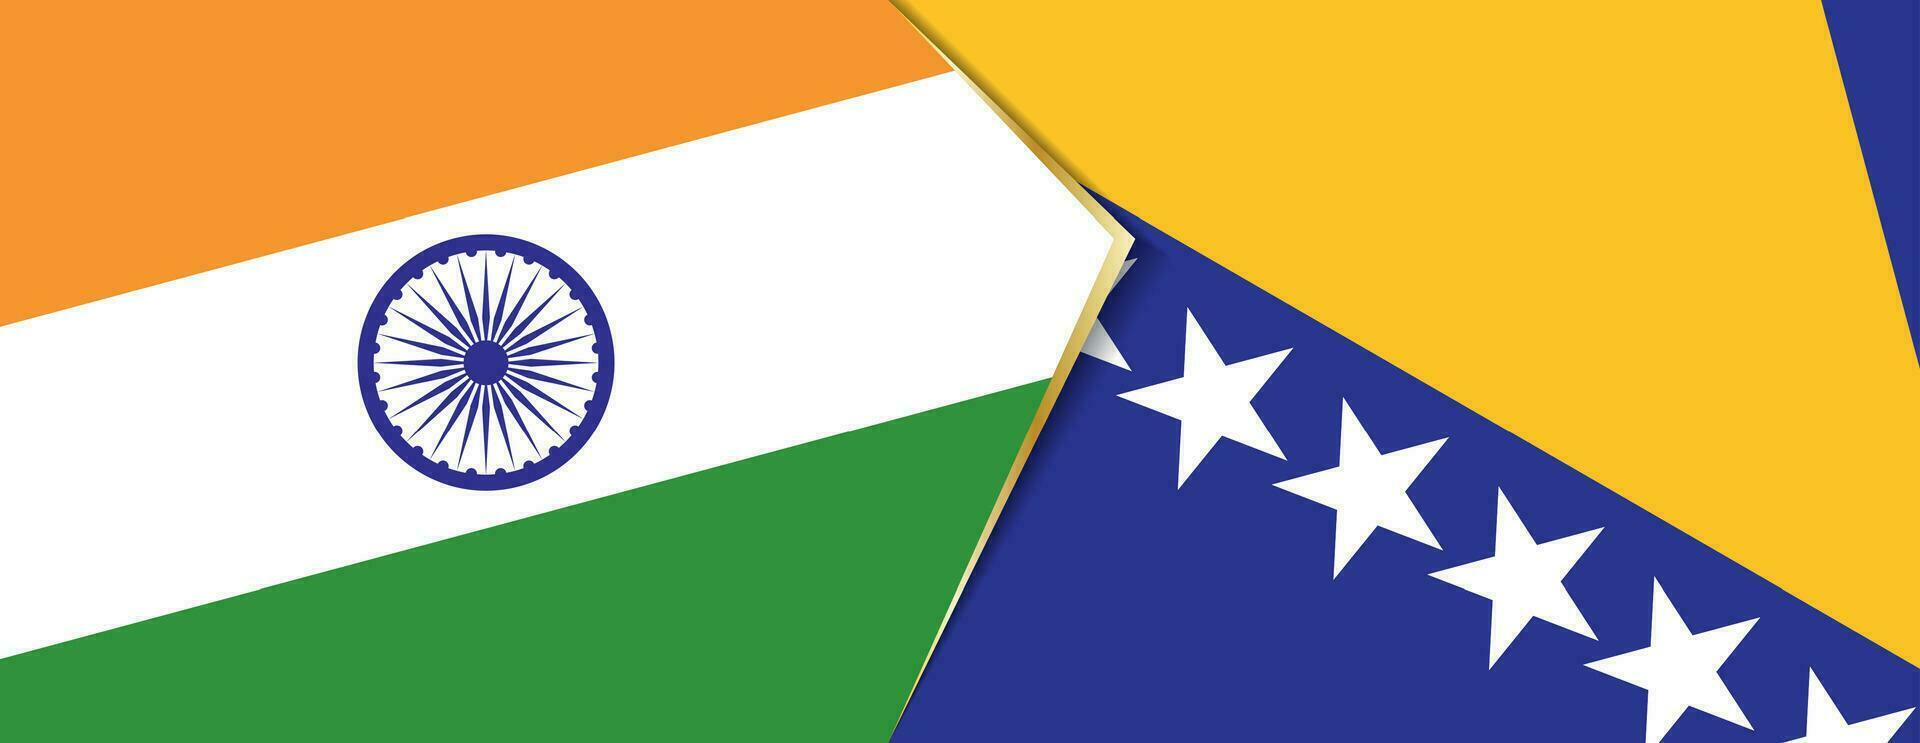 India e bosnia e erzegovina bandiere, Due vettore bandiere.